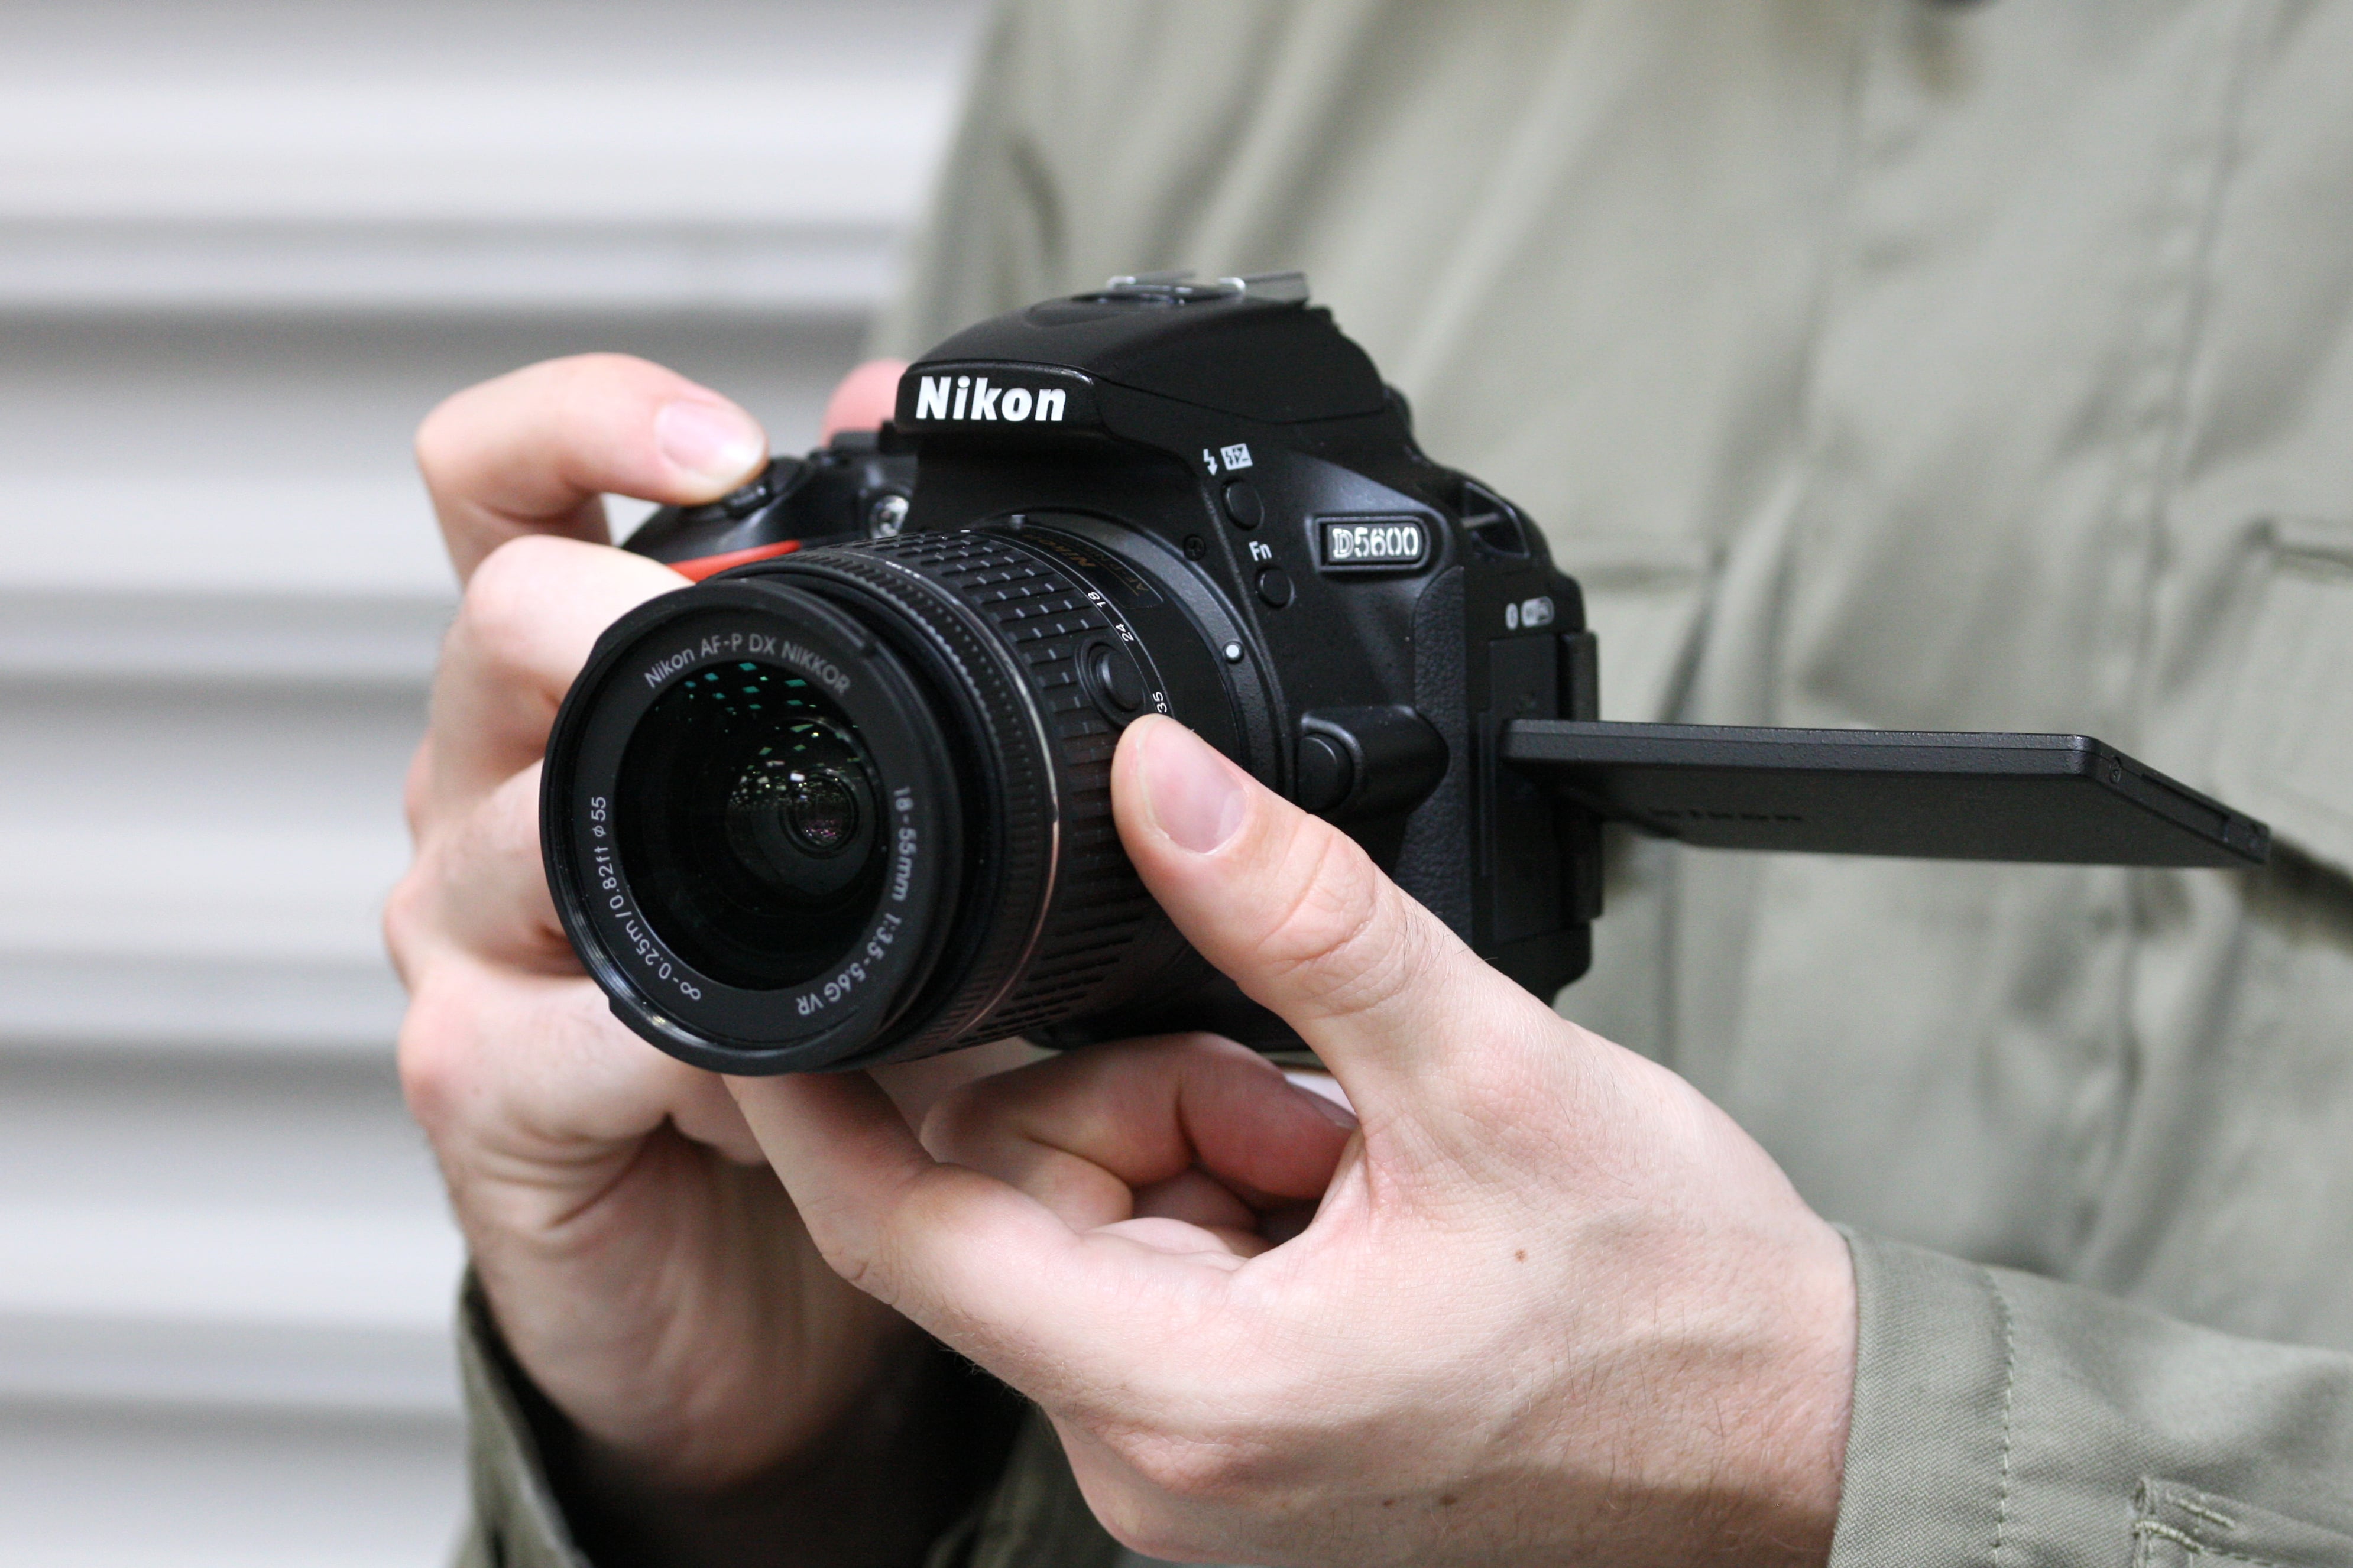 Nikon D5600 DSLR Camera Specifications